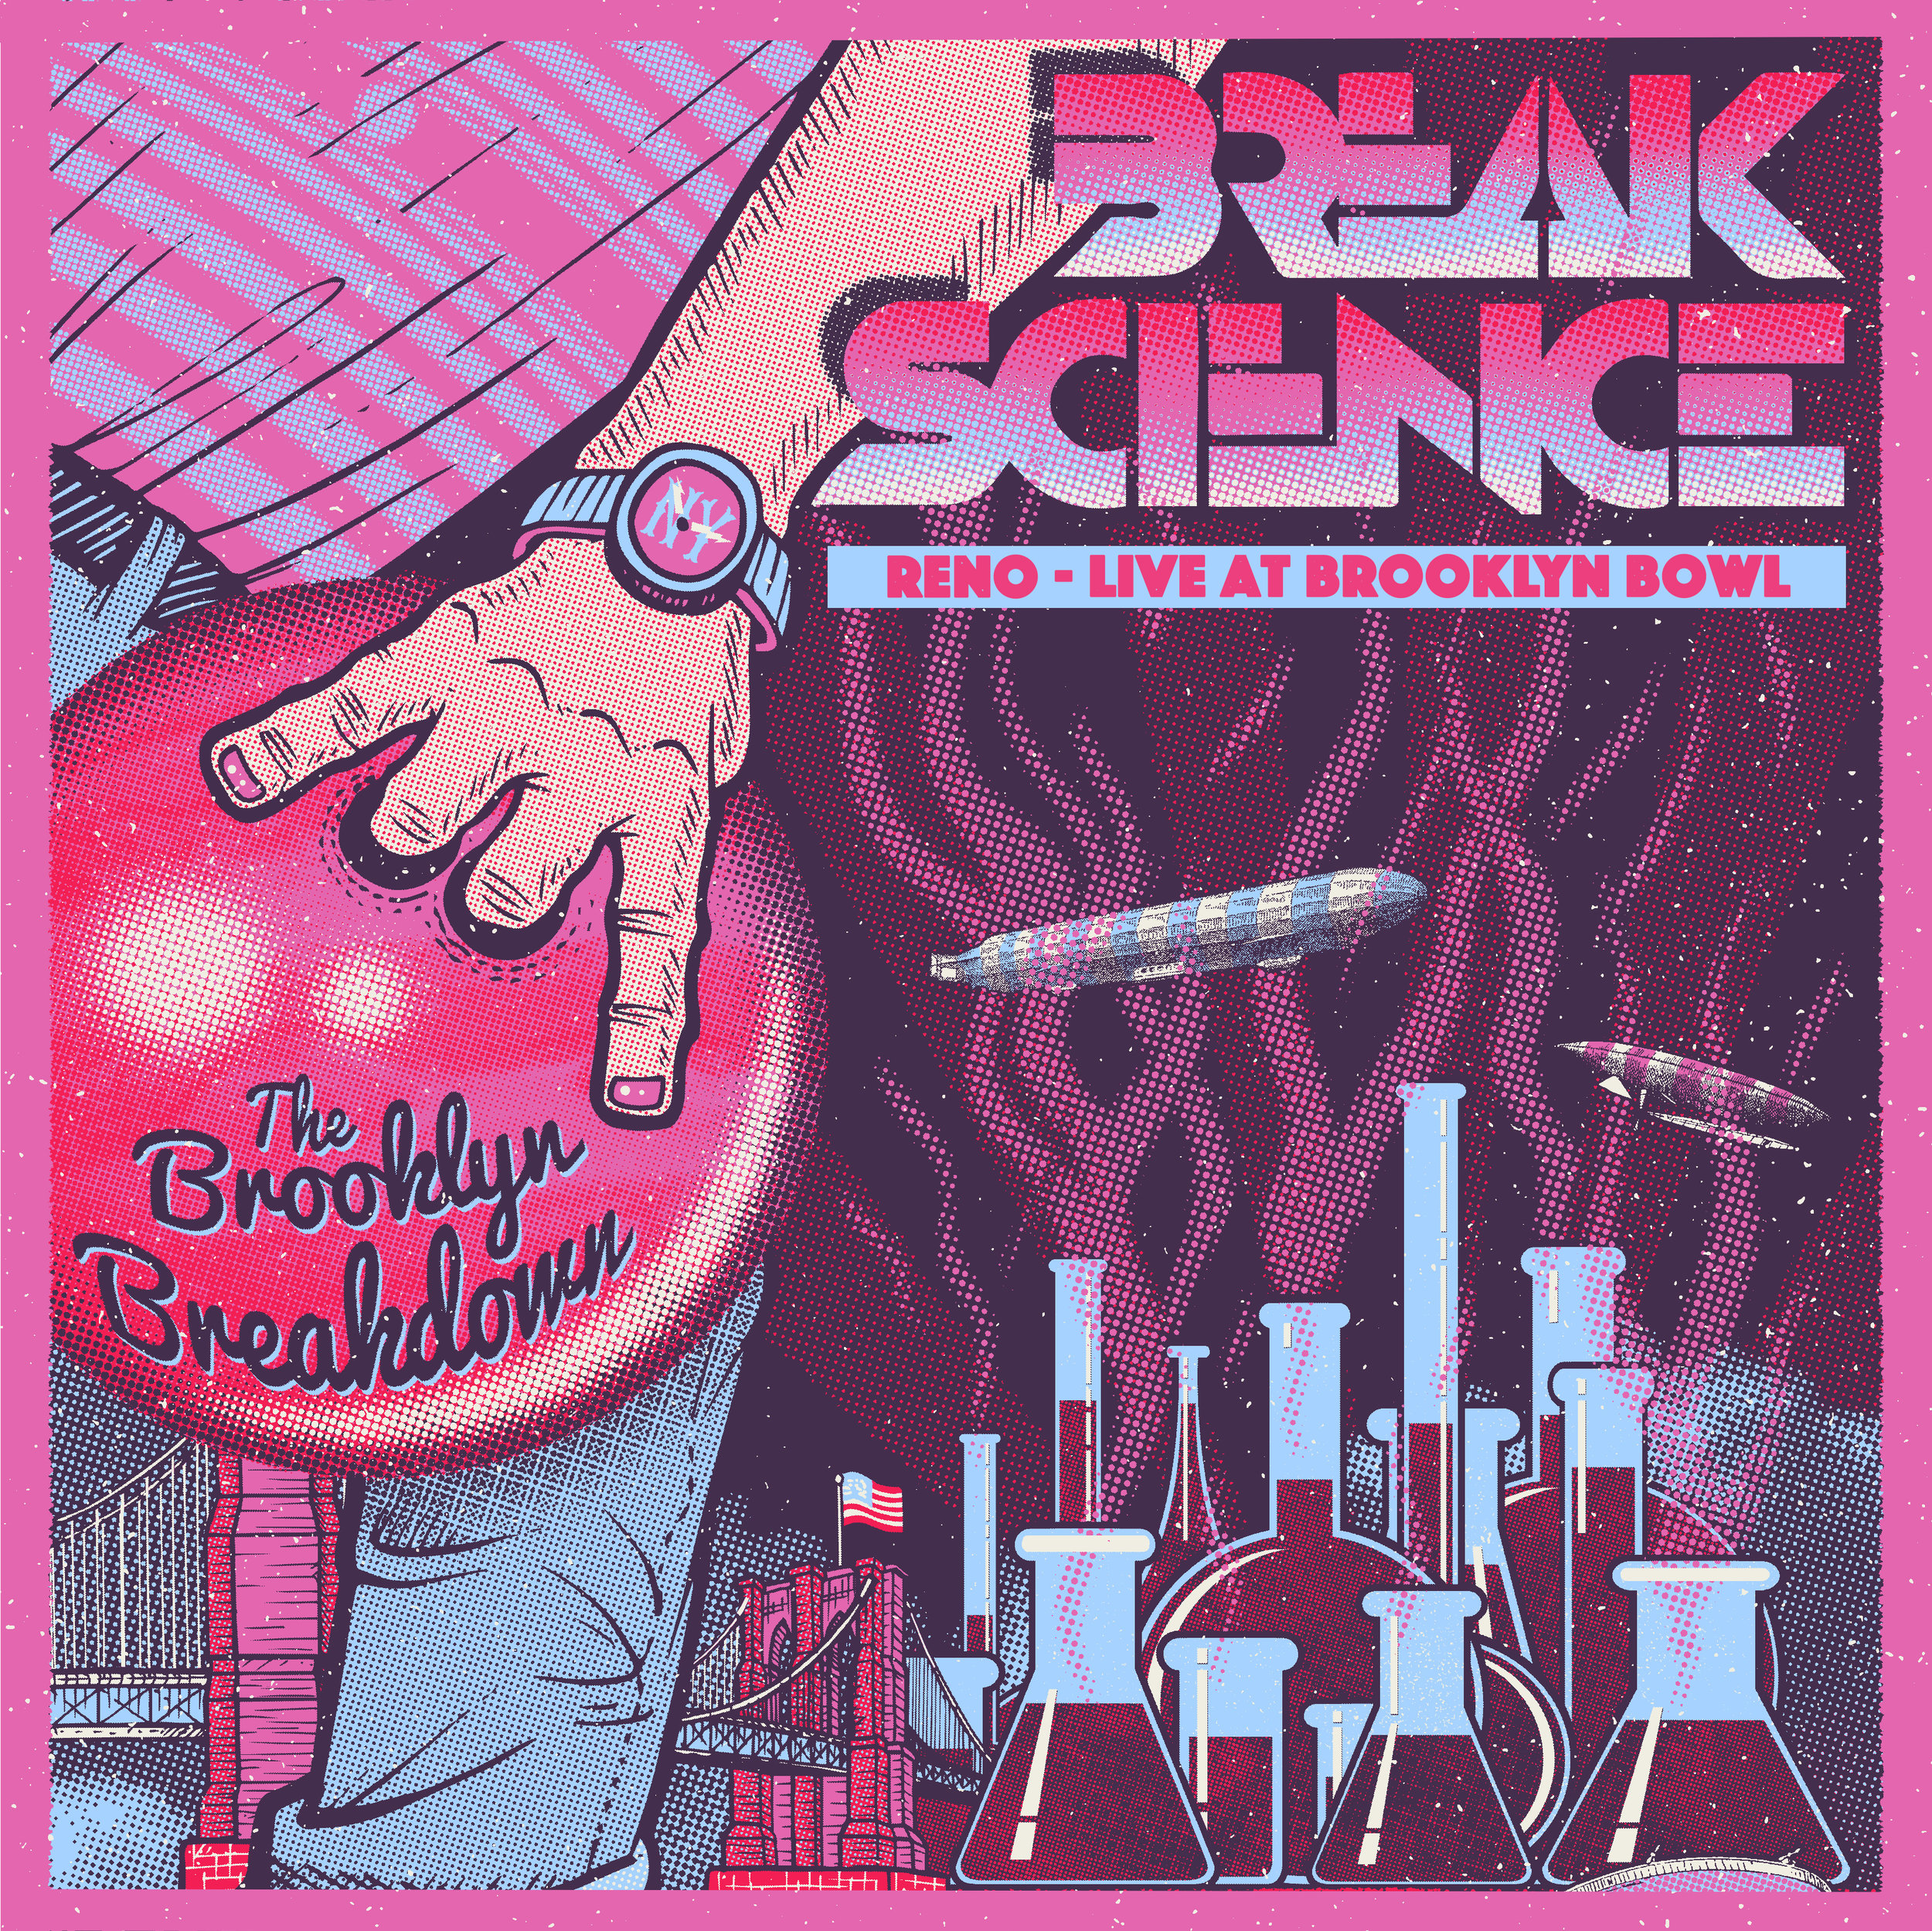 Break Science - Reno (Live at Brooklyn Bowl) Cover Art v4.jpg